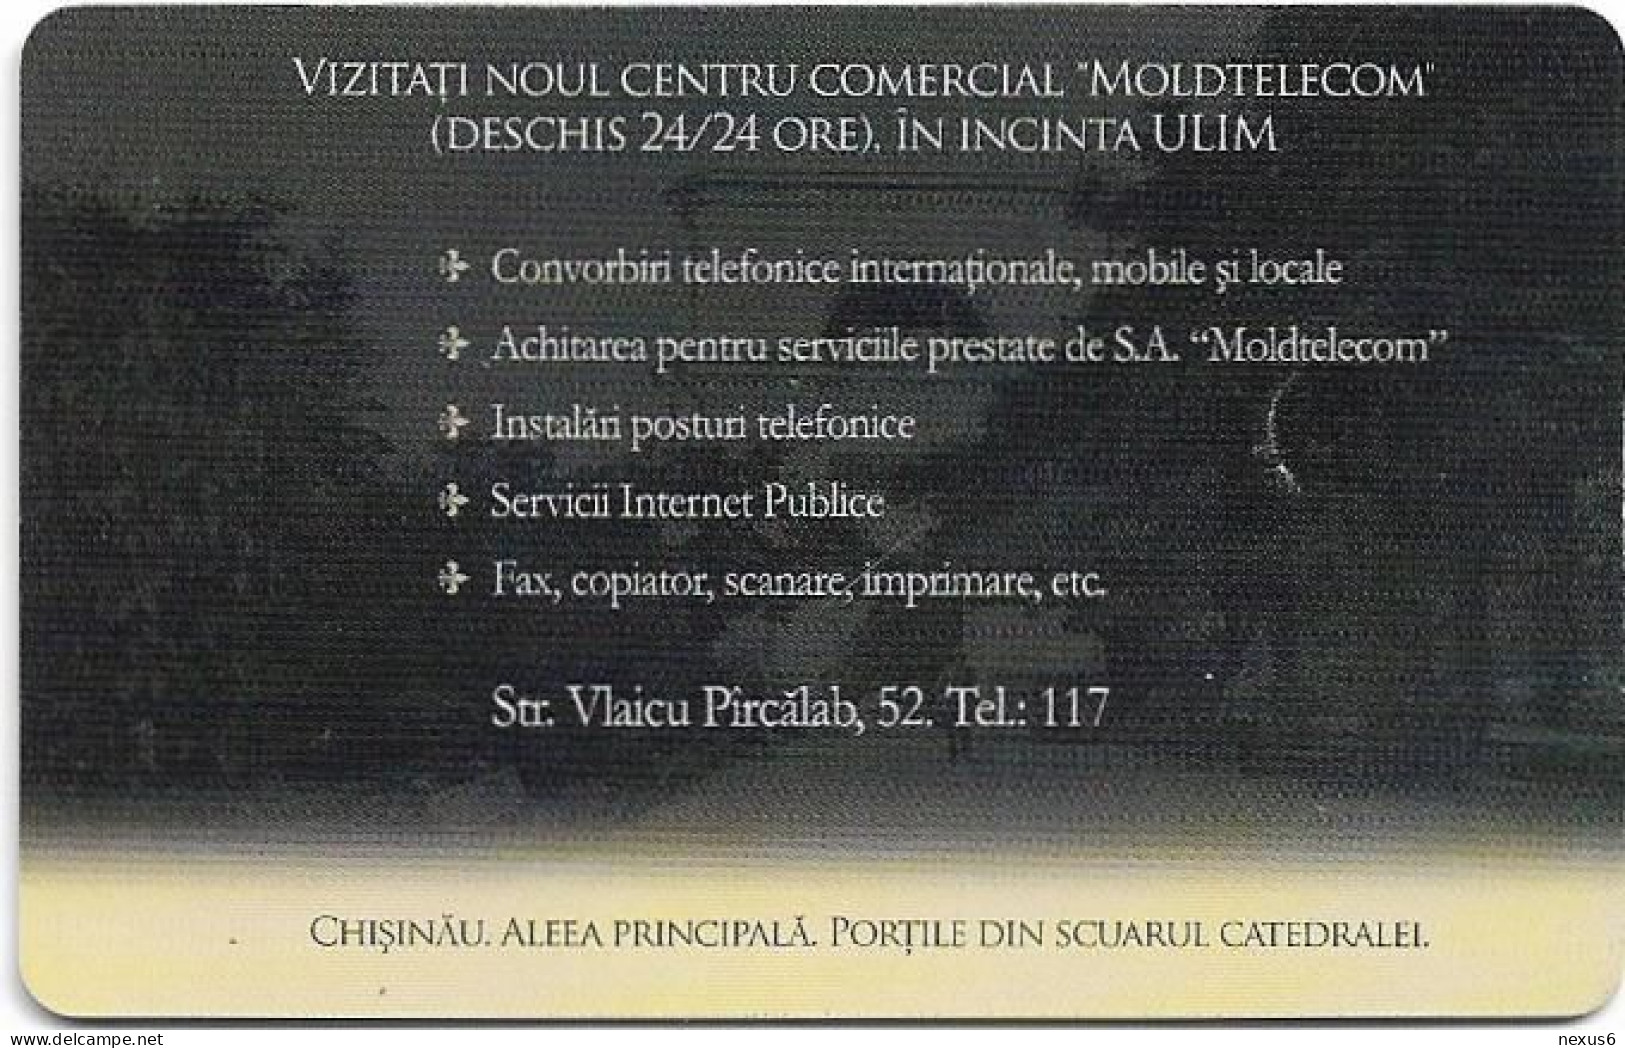 Moldova - Moldtelecom - Chisinau, Aleea Principala, Chip CHT08, 09.2005, 100U, 15.603ex, Used - Moldavia